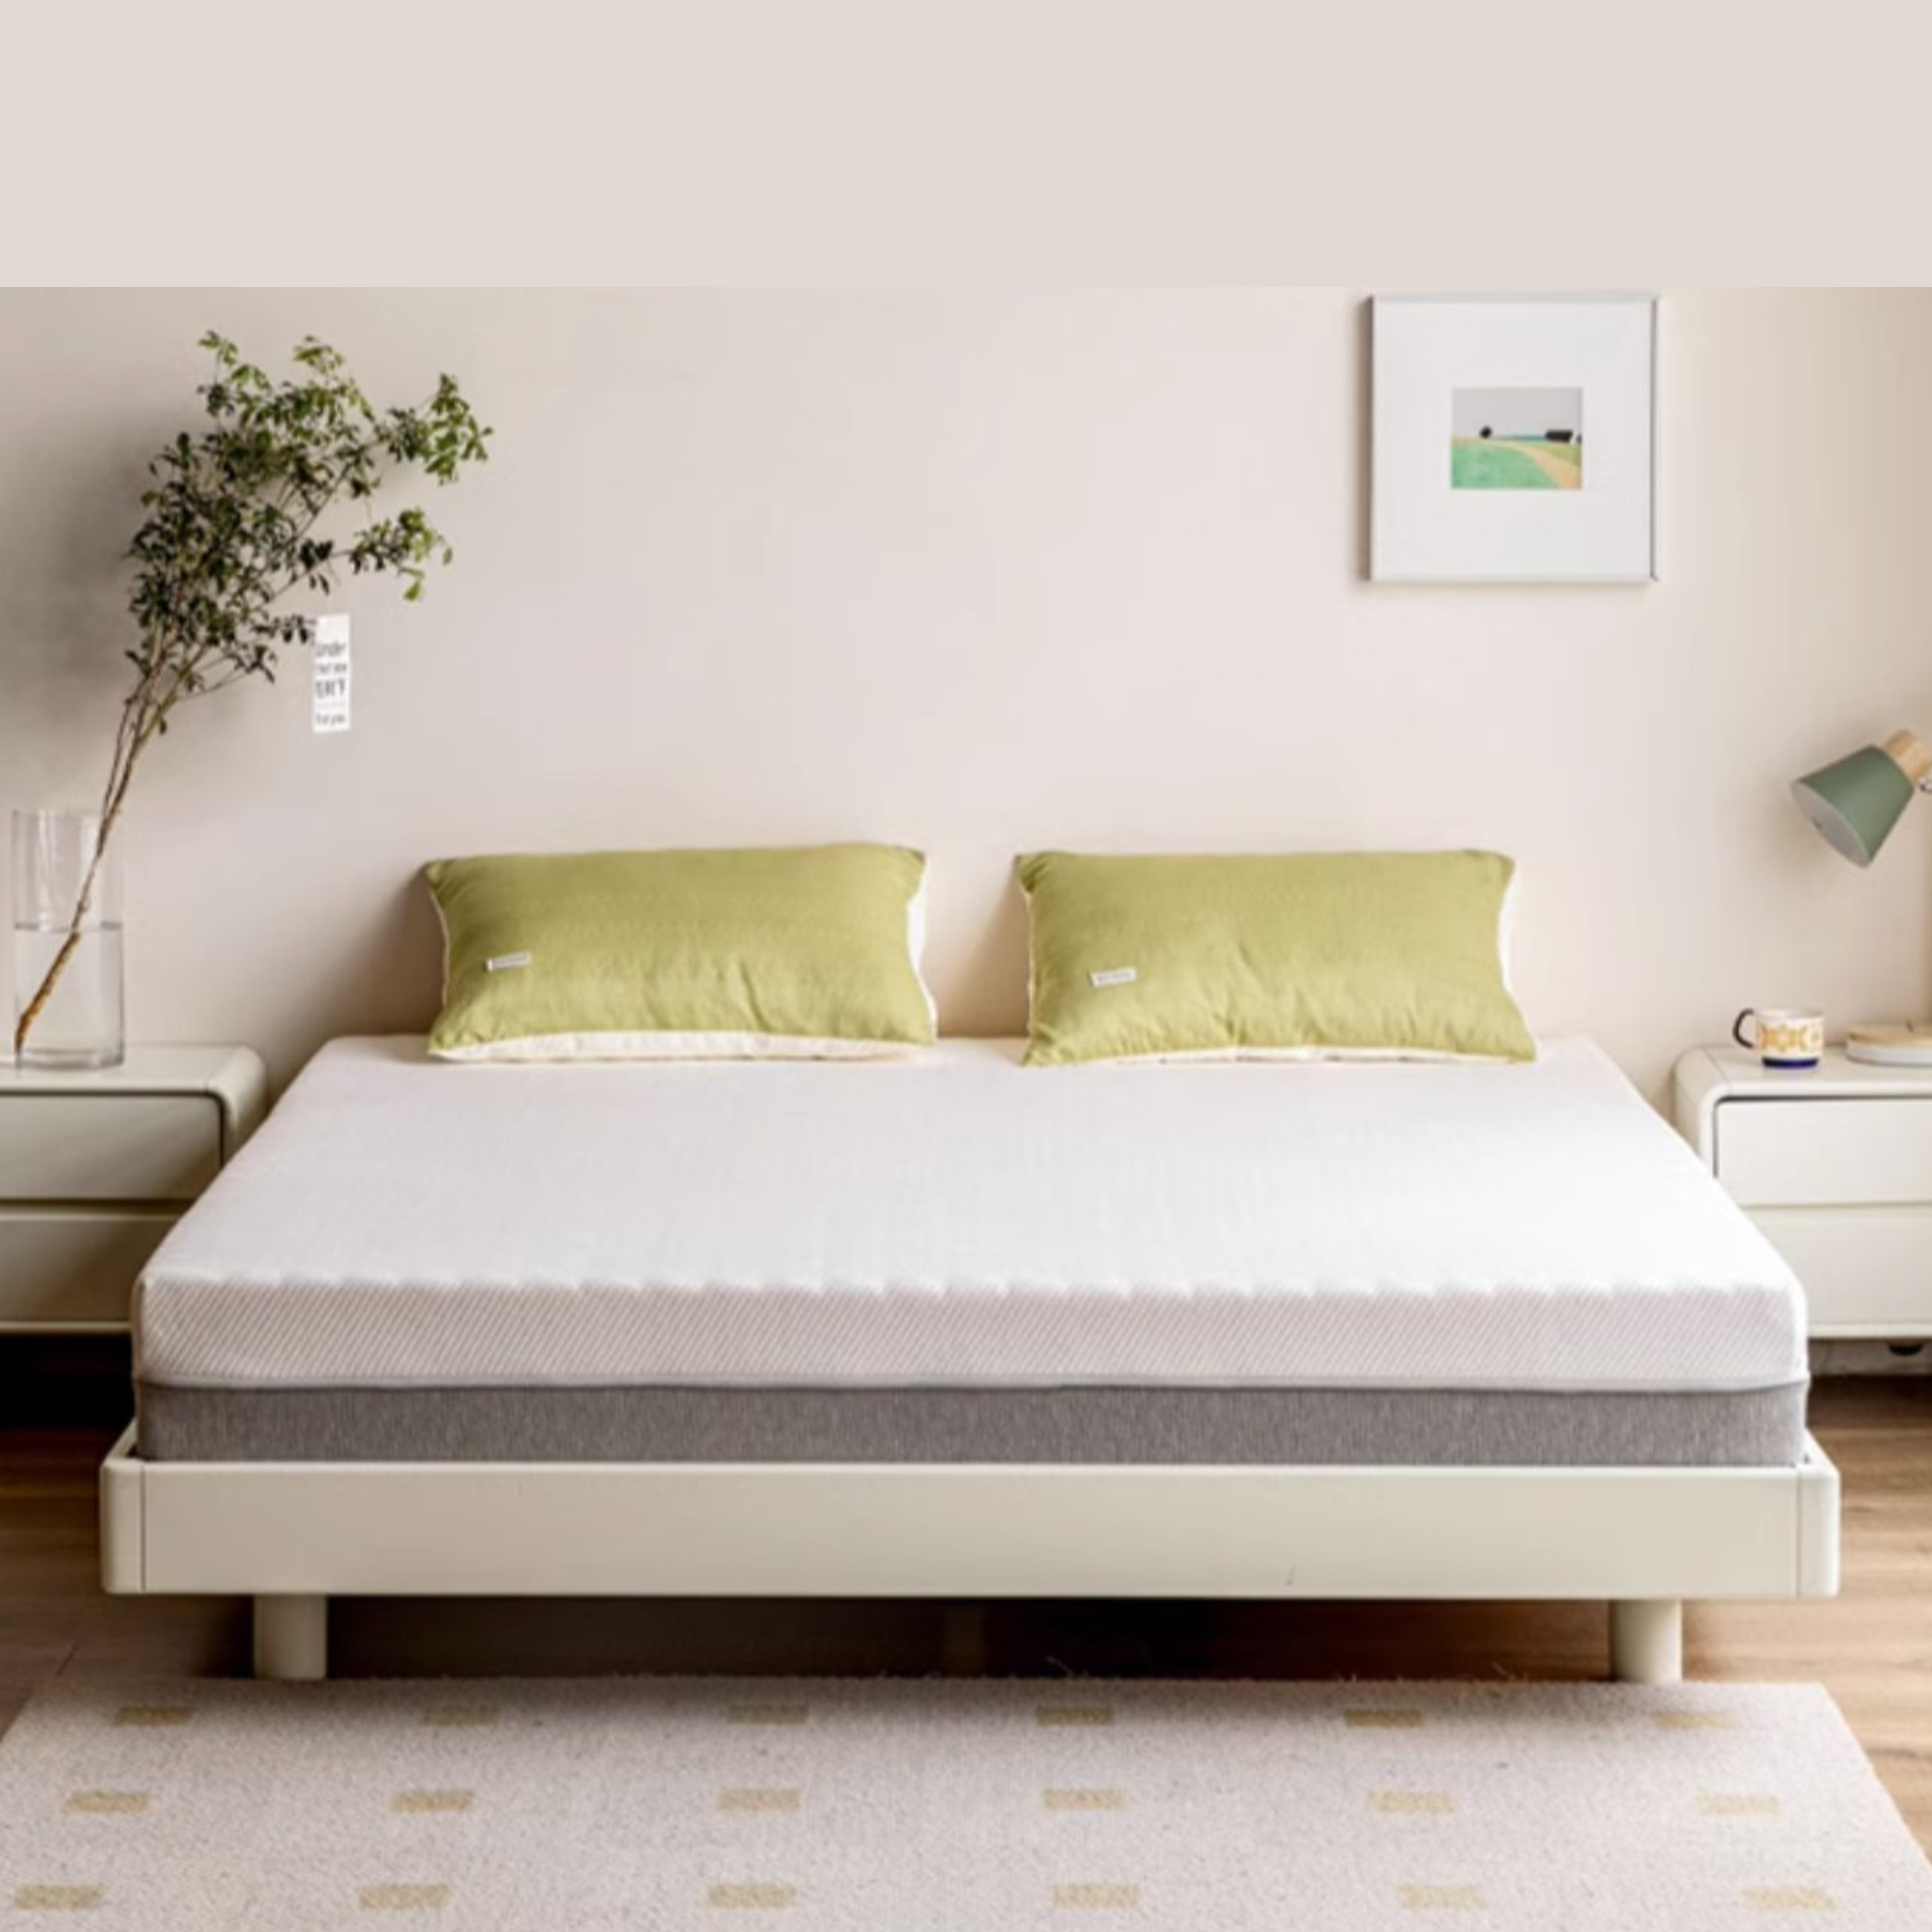 Spring Simmons cushion antibacterial anti-mite Power sponge moderate mattress